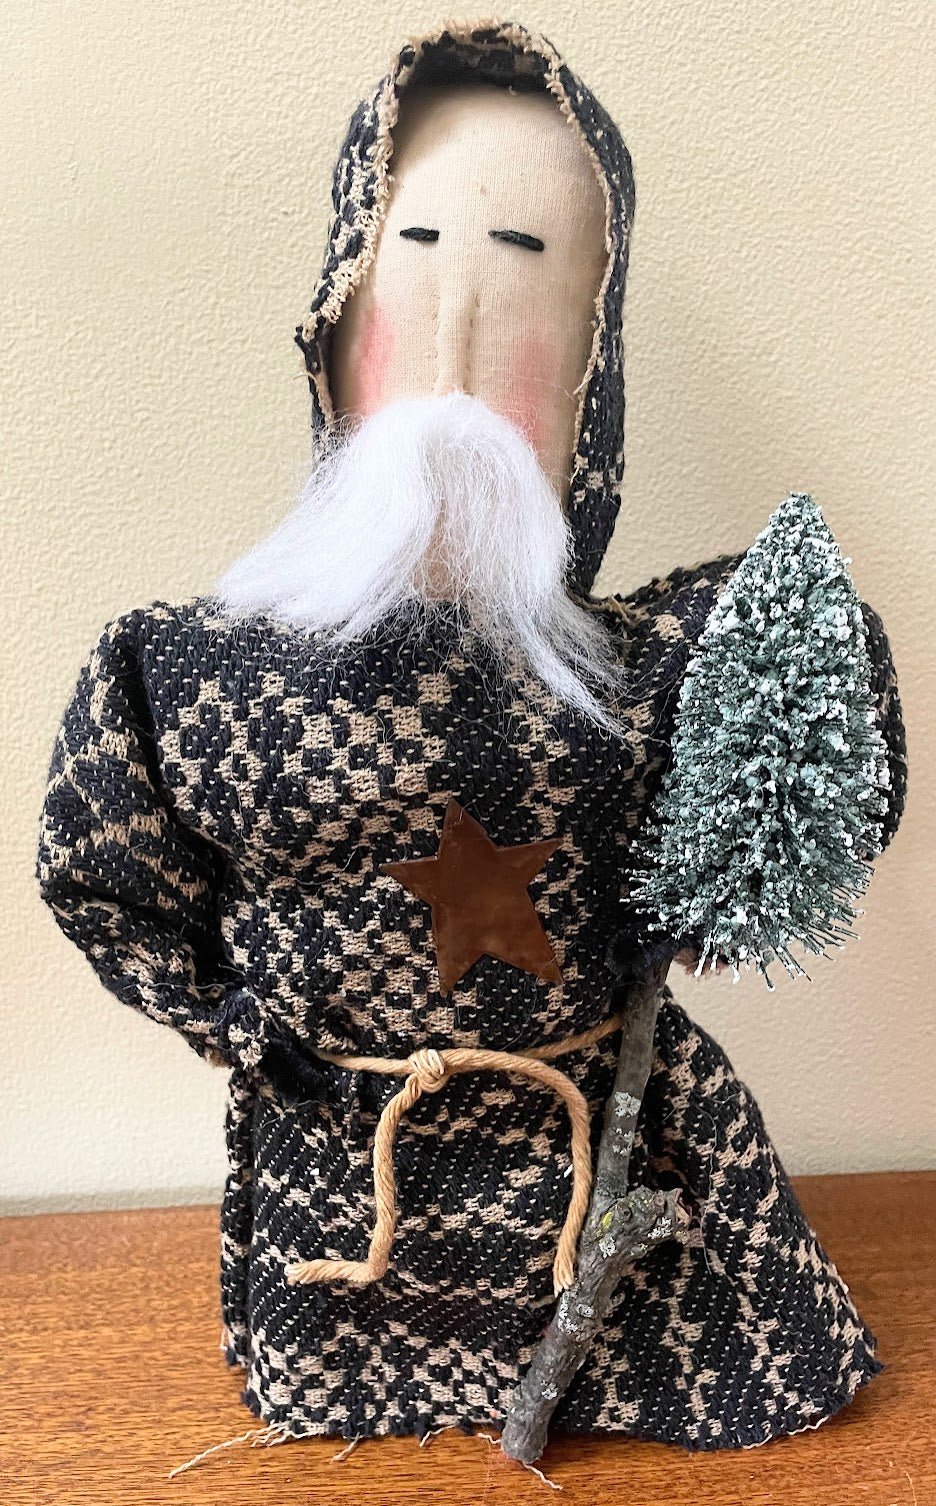 Christmas Handmade Kris Kringle Stump Santa Doll w/ Prim Black Coverlet - The Primitive Pineapple Collection